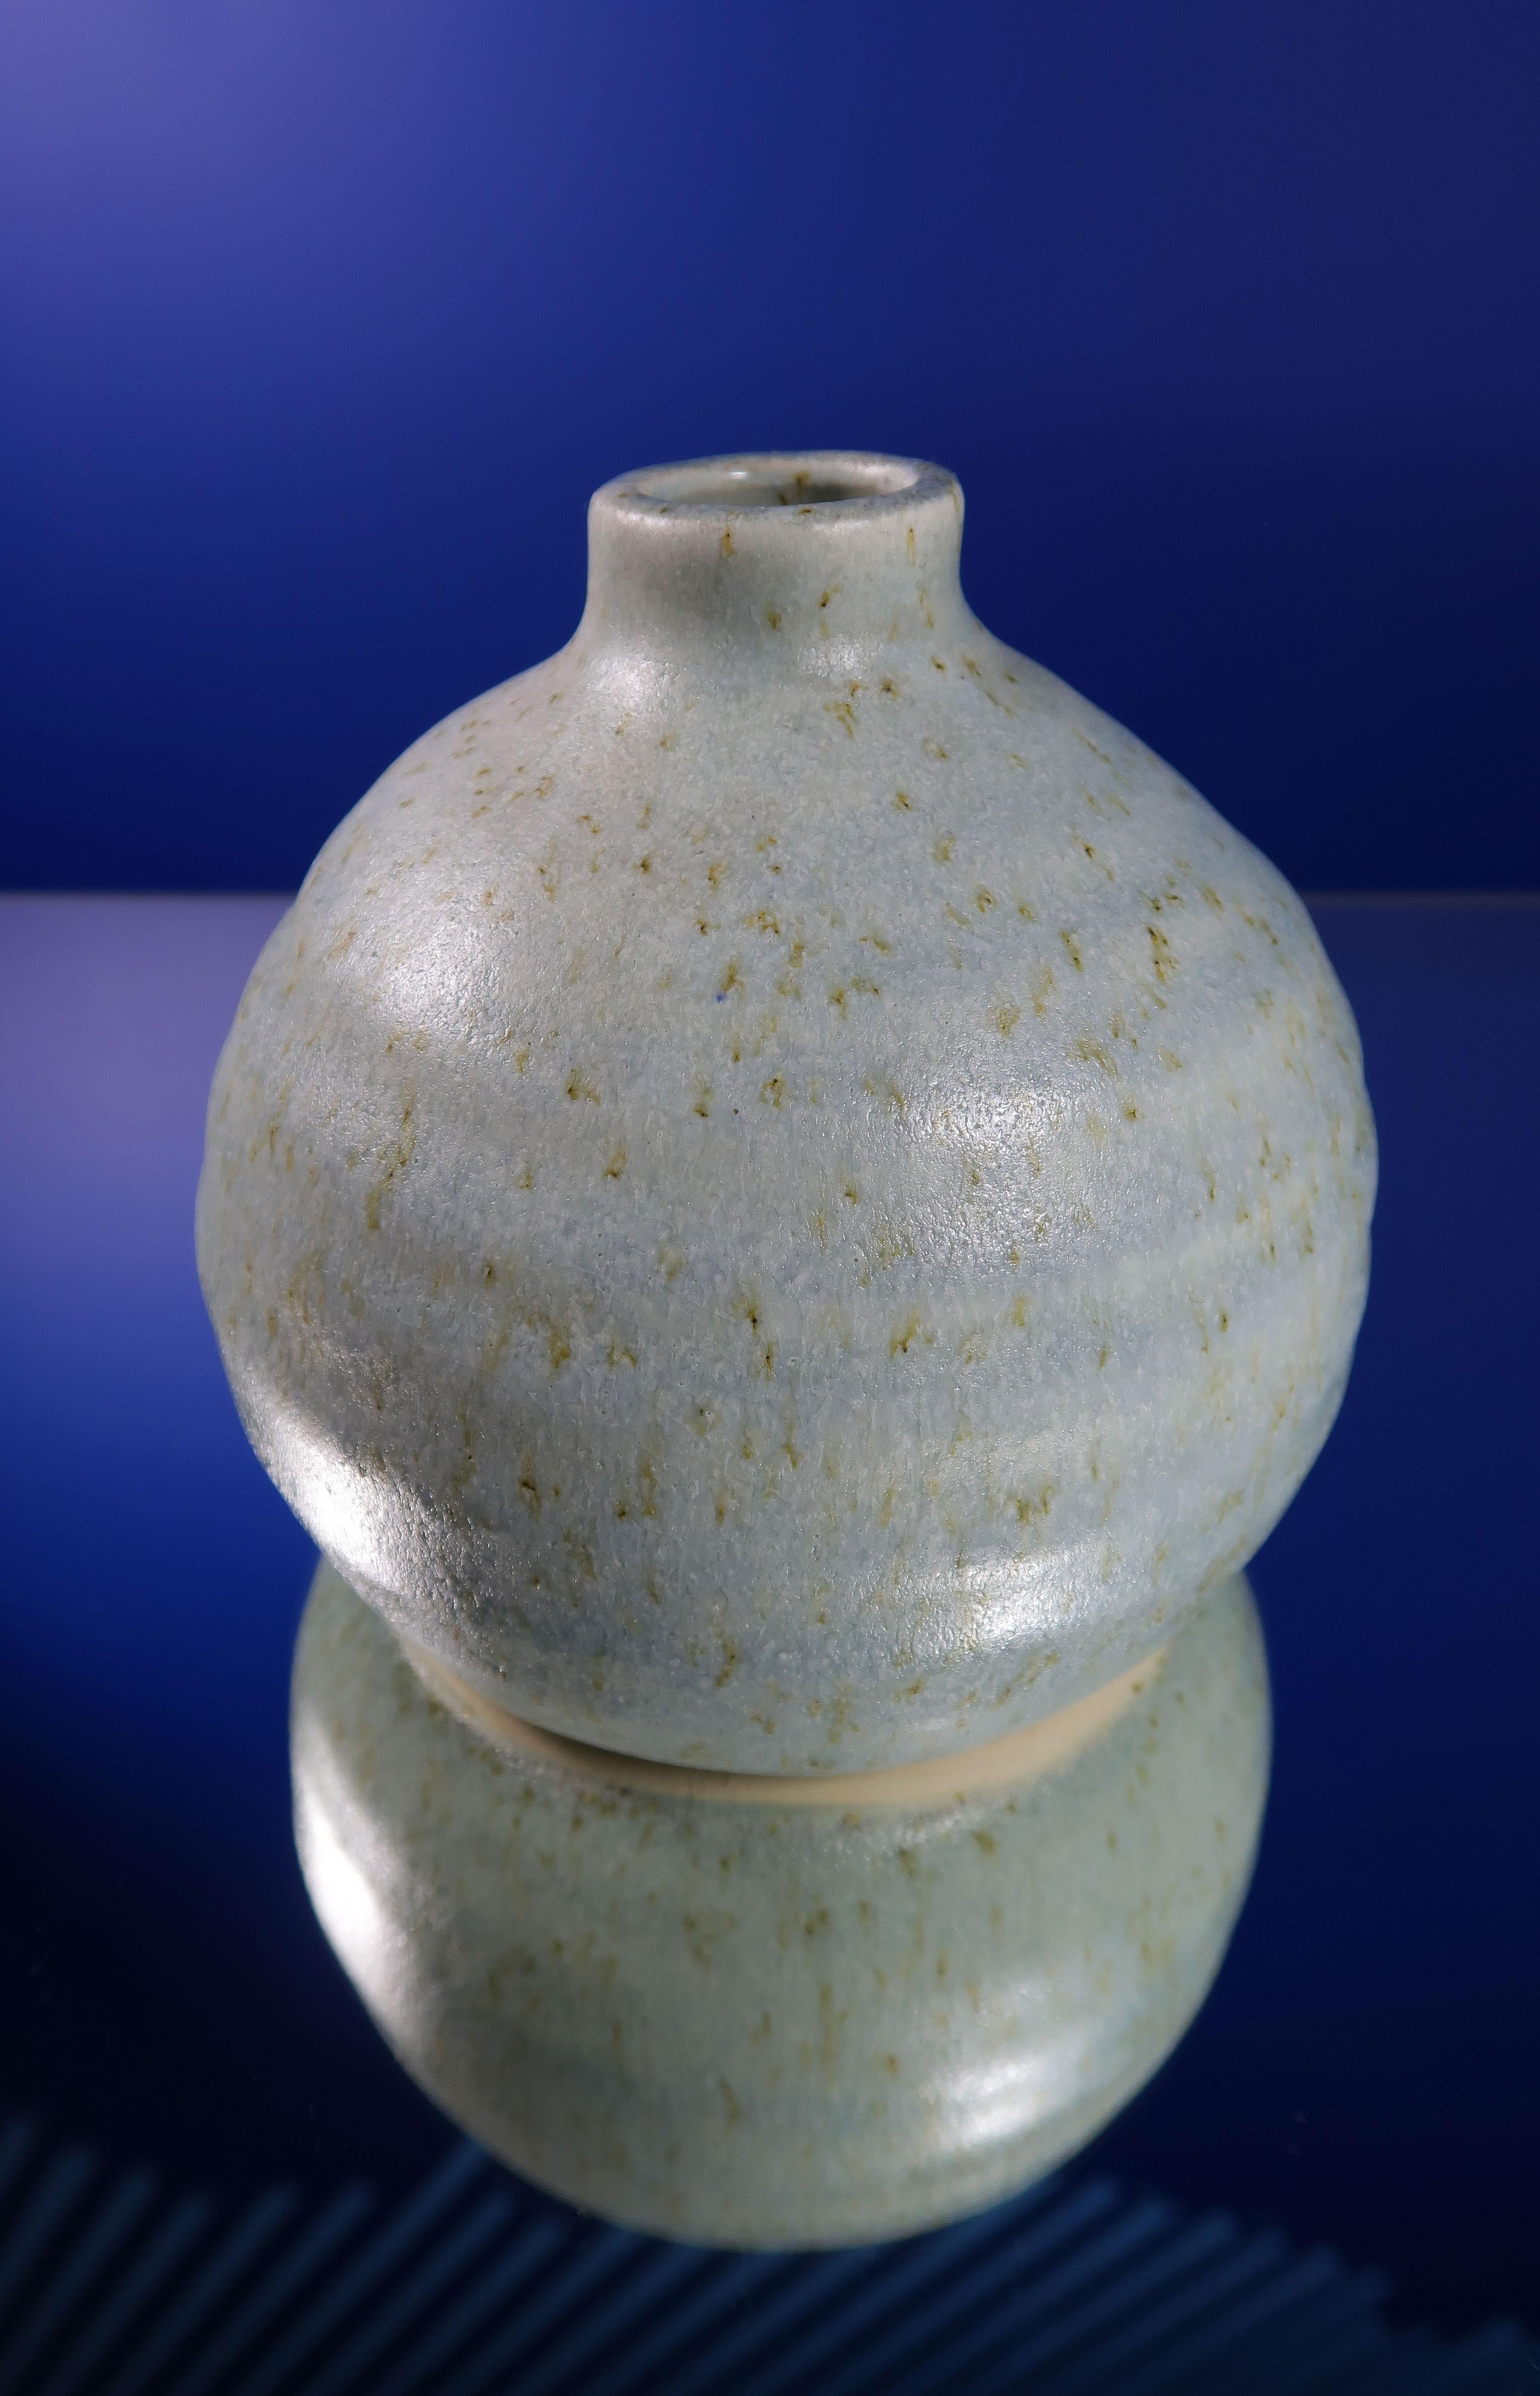 Handmade Scandinavian midcentury modern round ceramic vase. Light aqua blue glaze with caramel colored speckles. Plump shape with short neck. Beautiful vintage condition. 